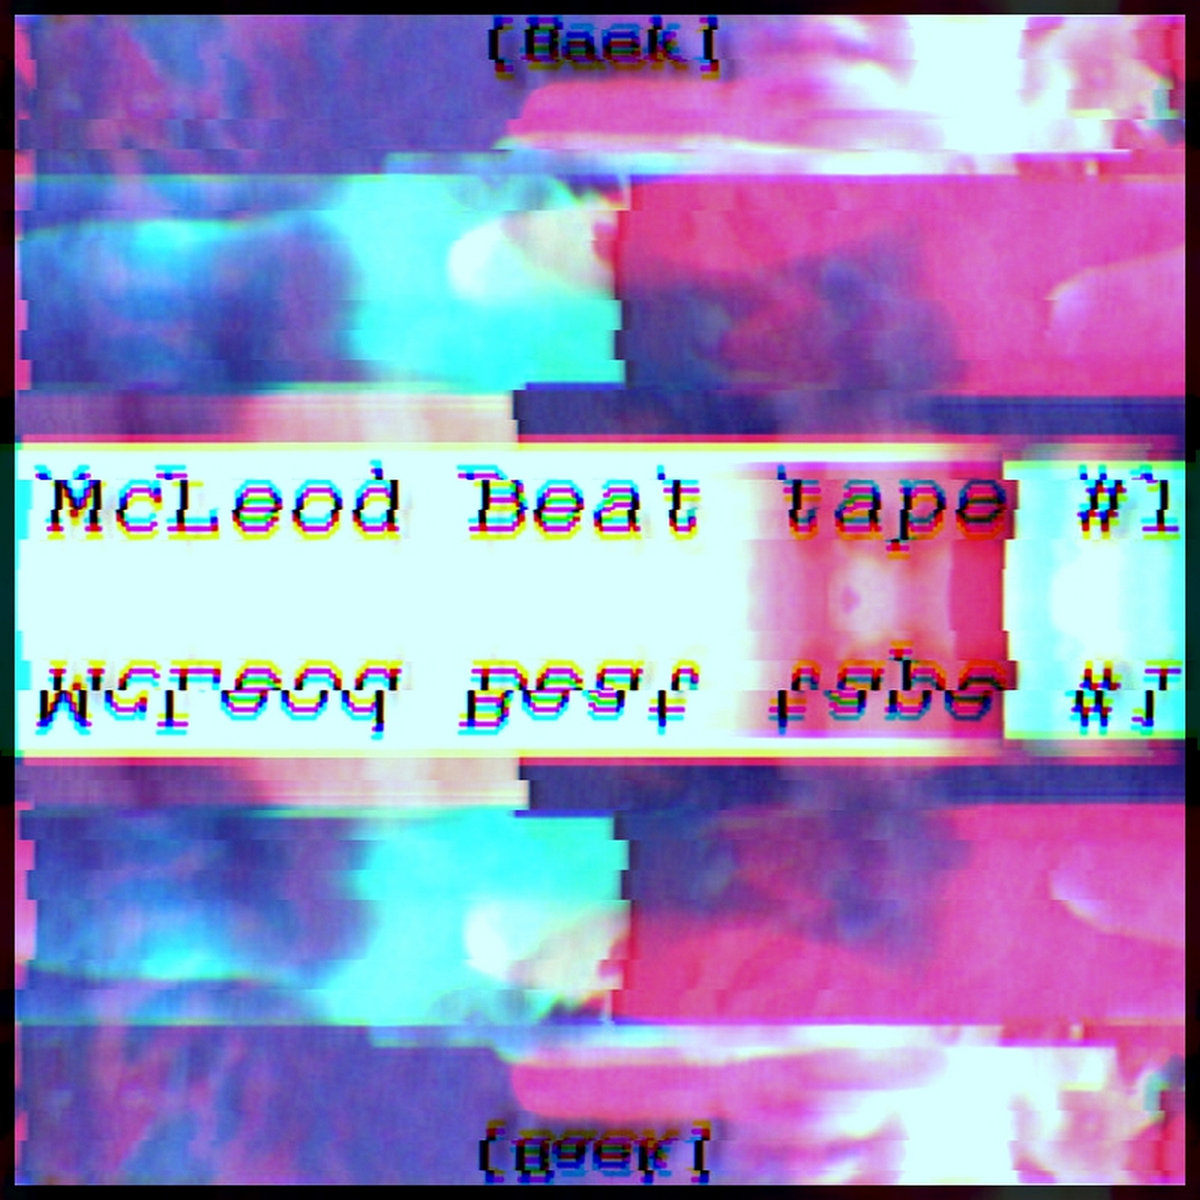 Baek - "McLeod Beat Tape #1" (Release)